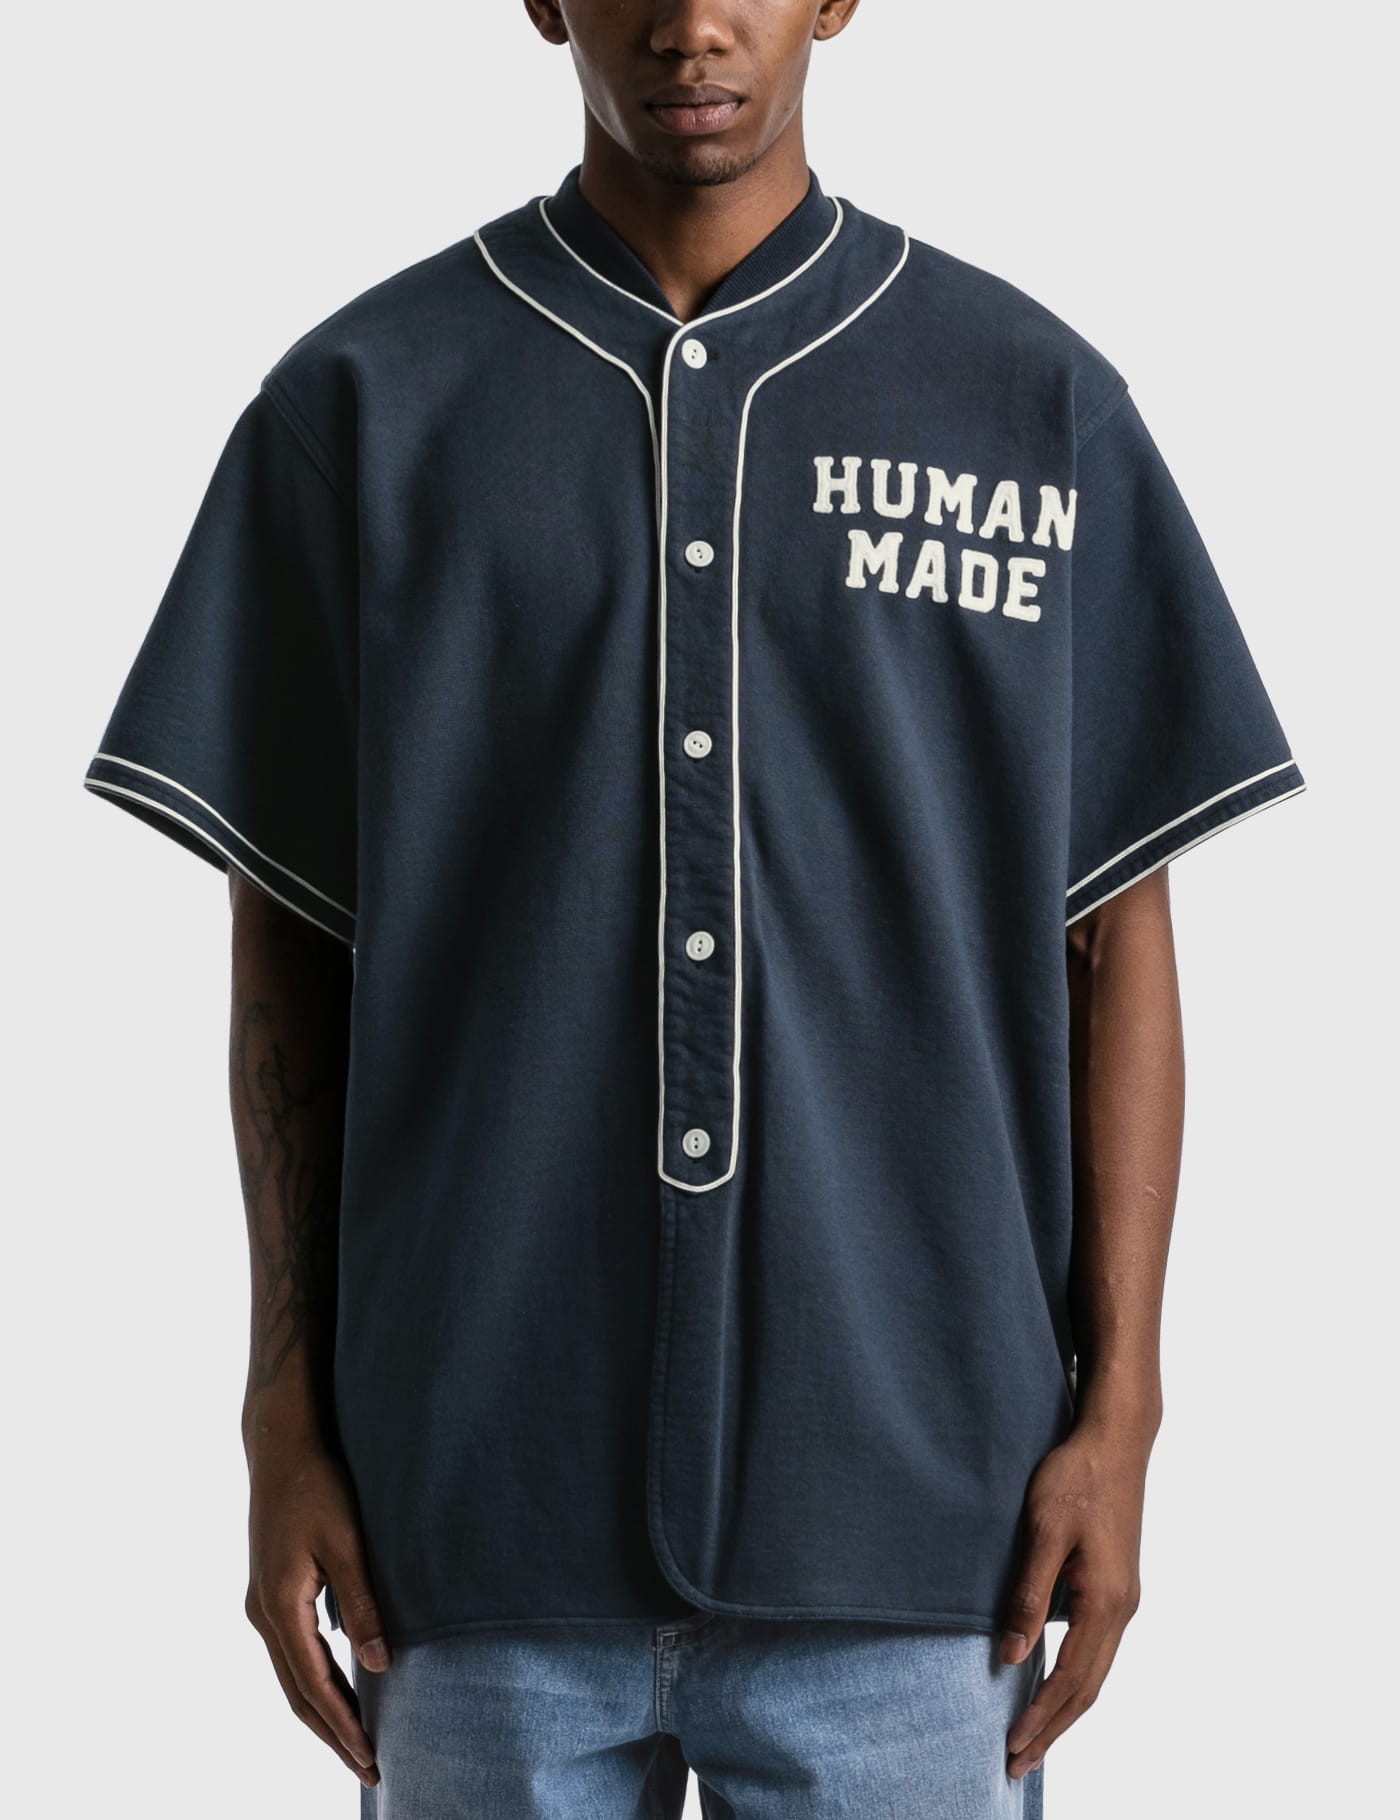 HUMAN MADE BASEBALL SHIRT ベースボールシャツ | www.innoveering.net